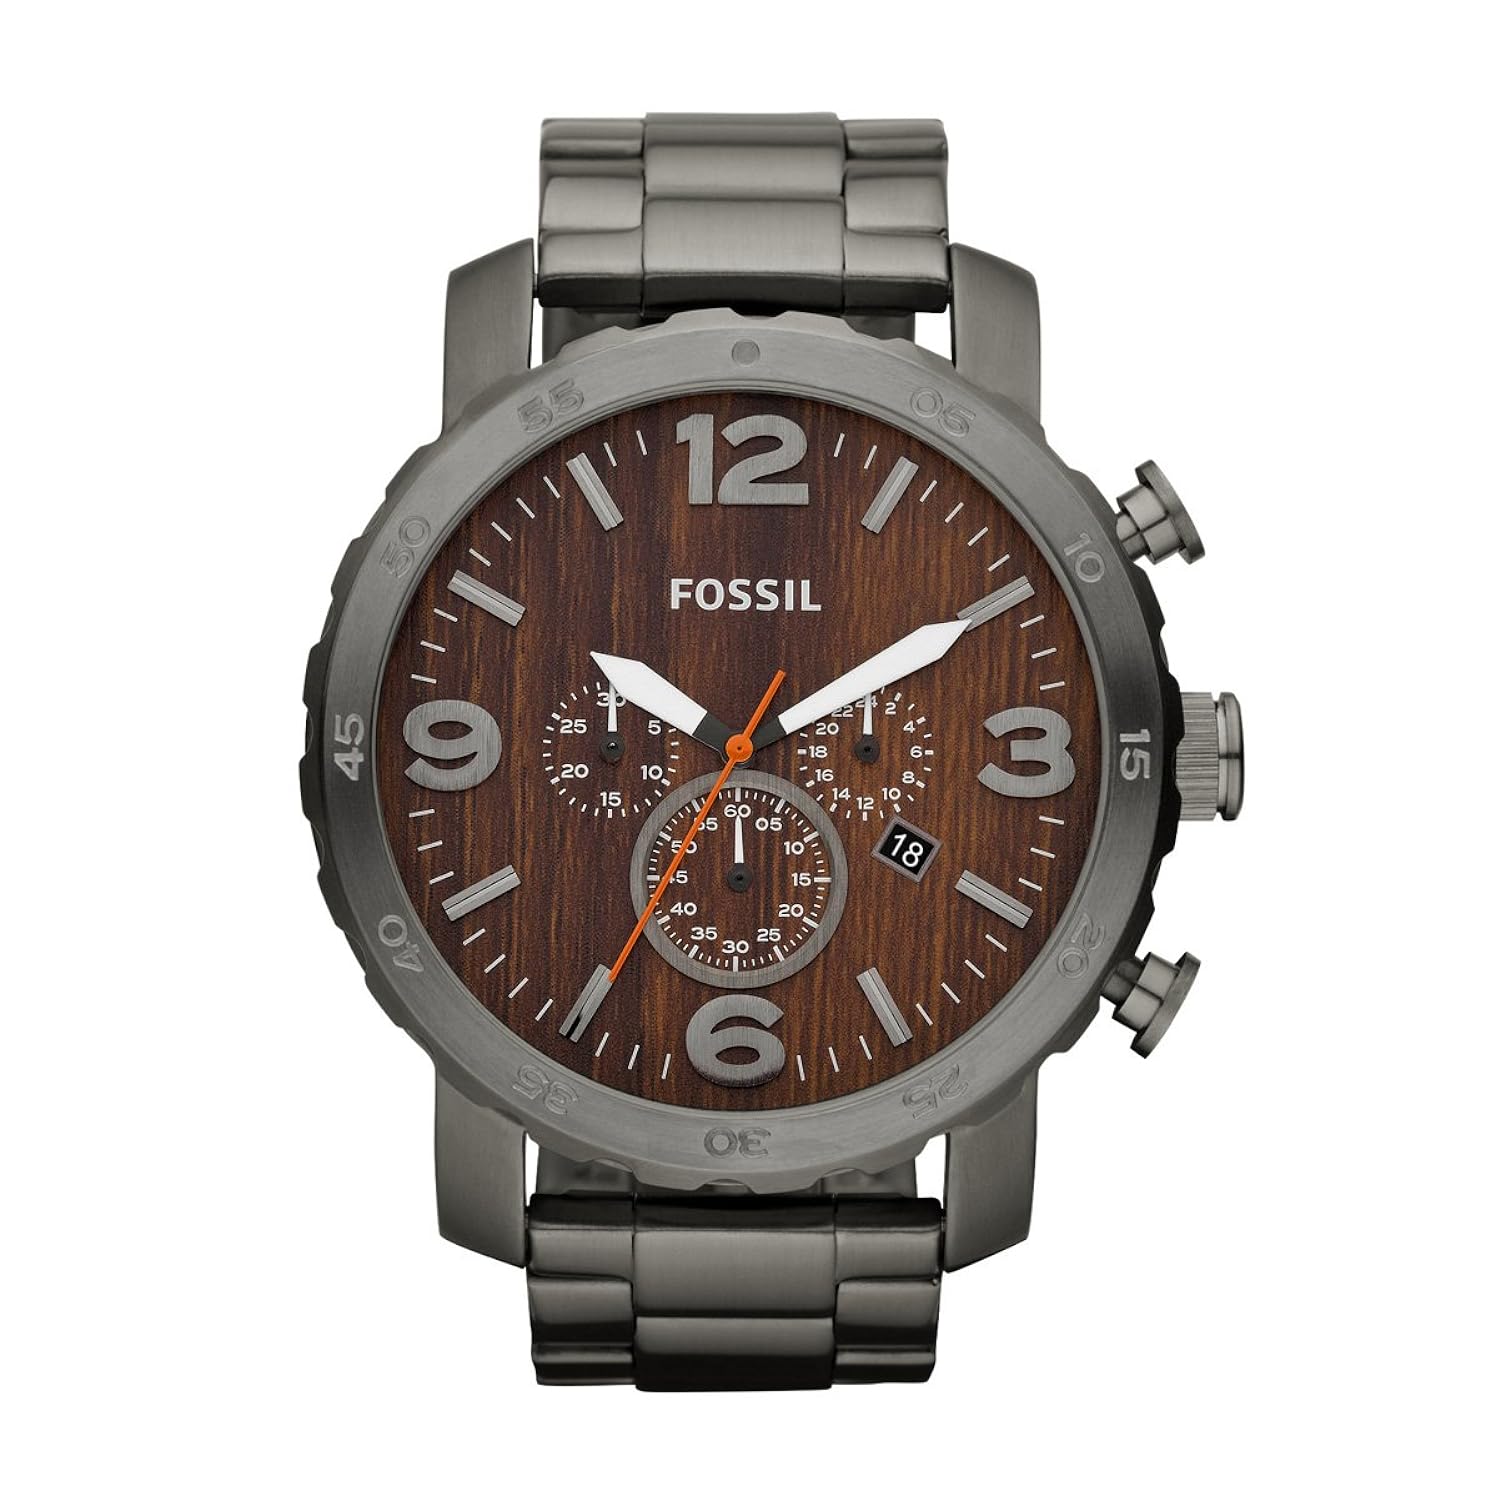 Fossil Herren-Armbanduhr XL Trend Analog